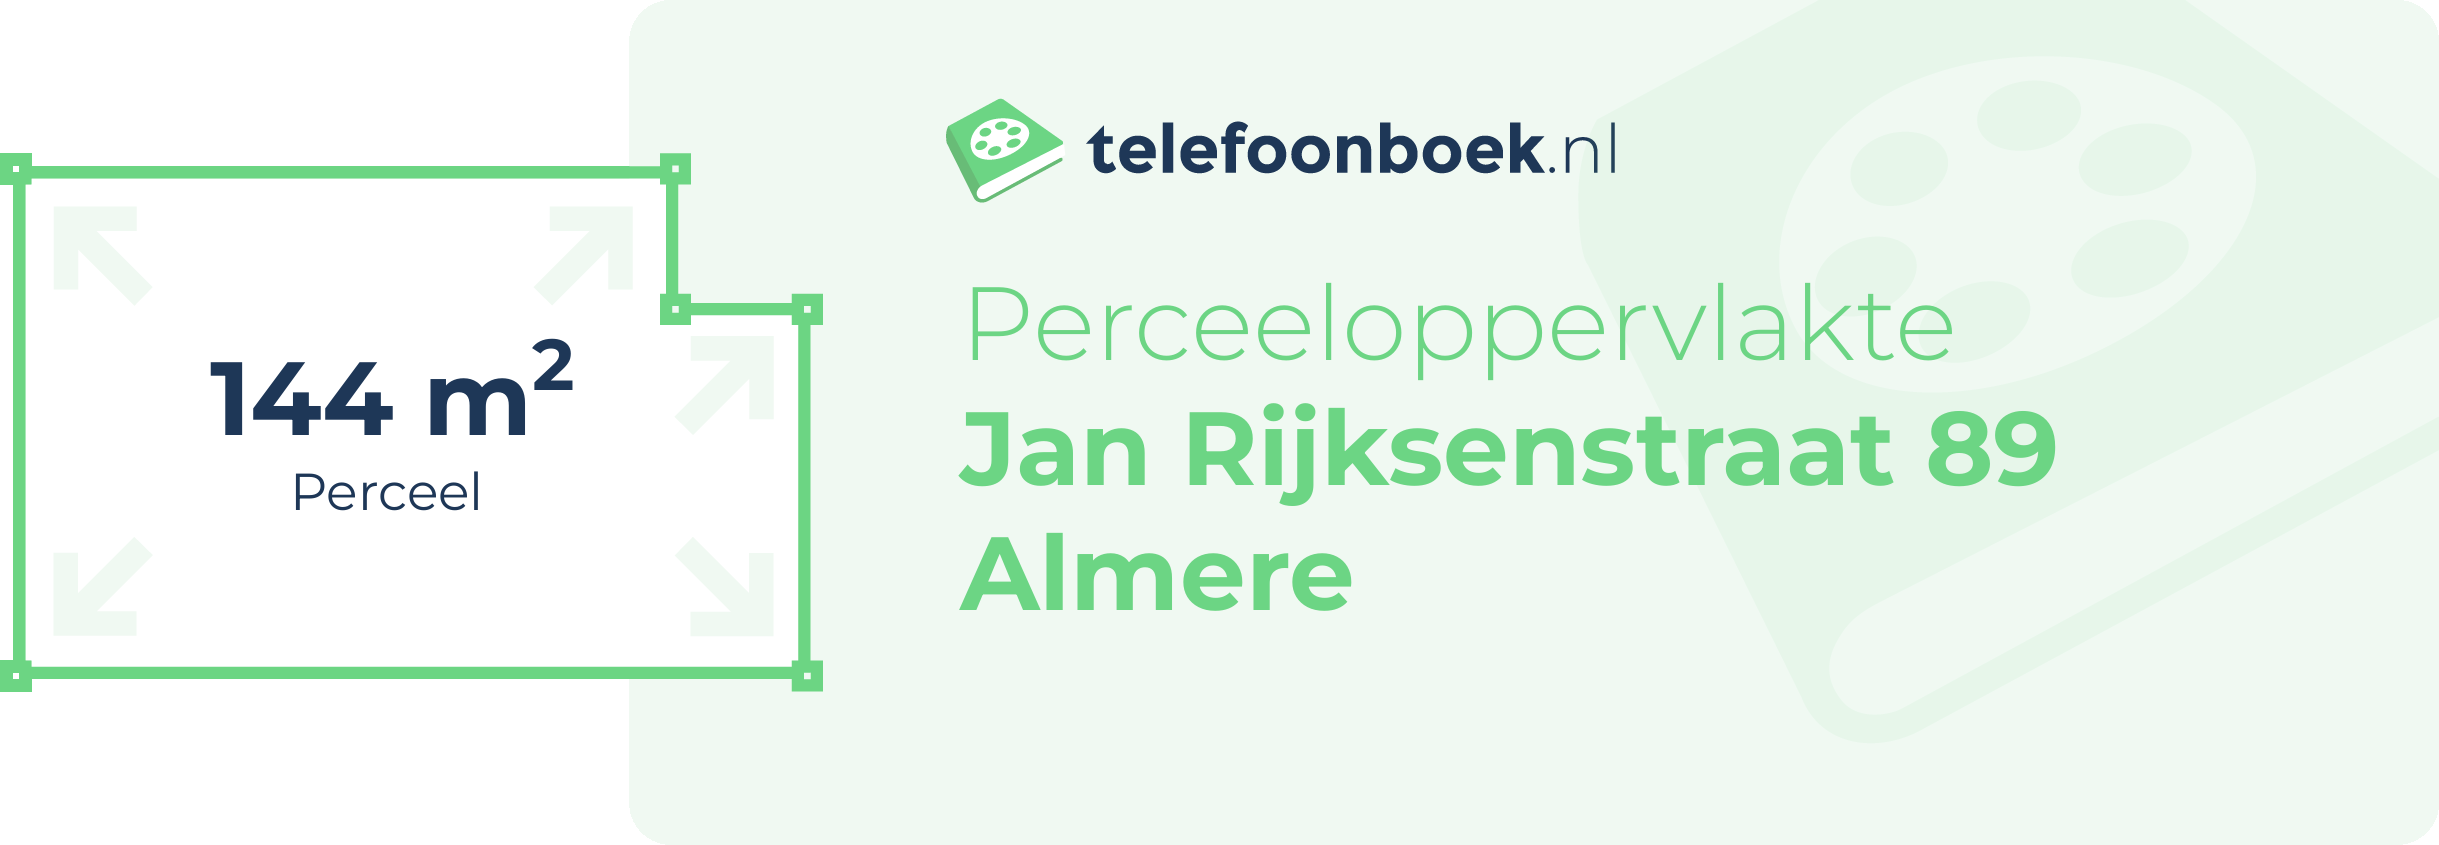 Perceeloppervlakte Jan Rijksenstraat 89 Almere